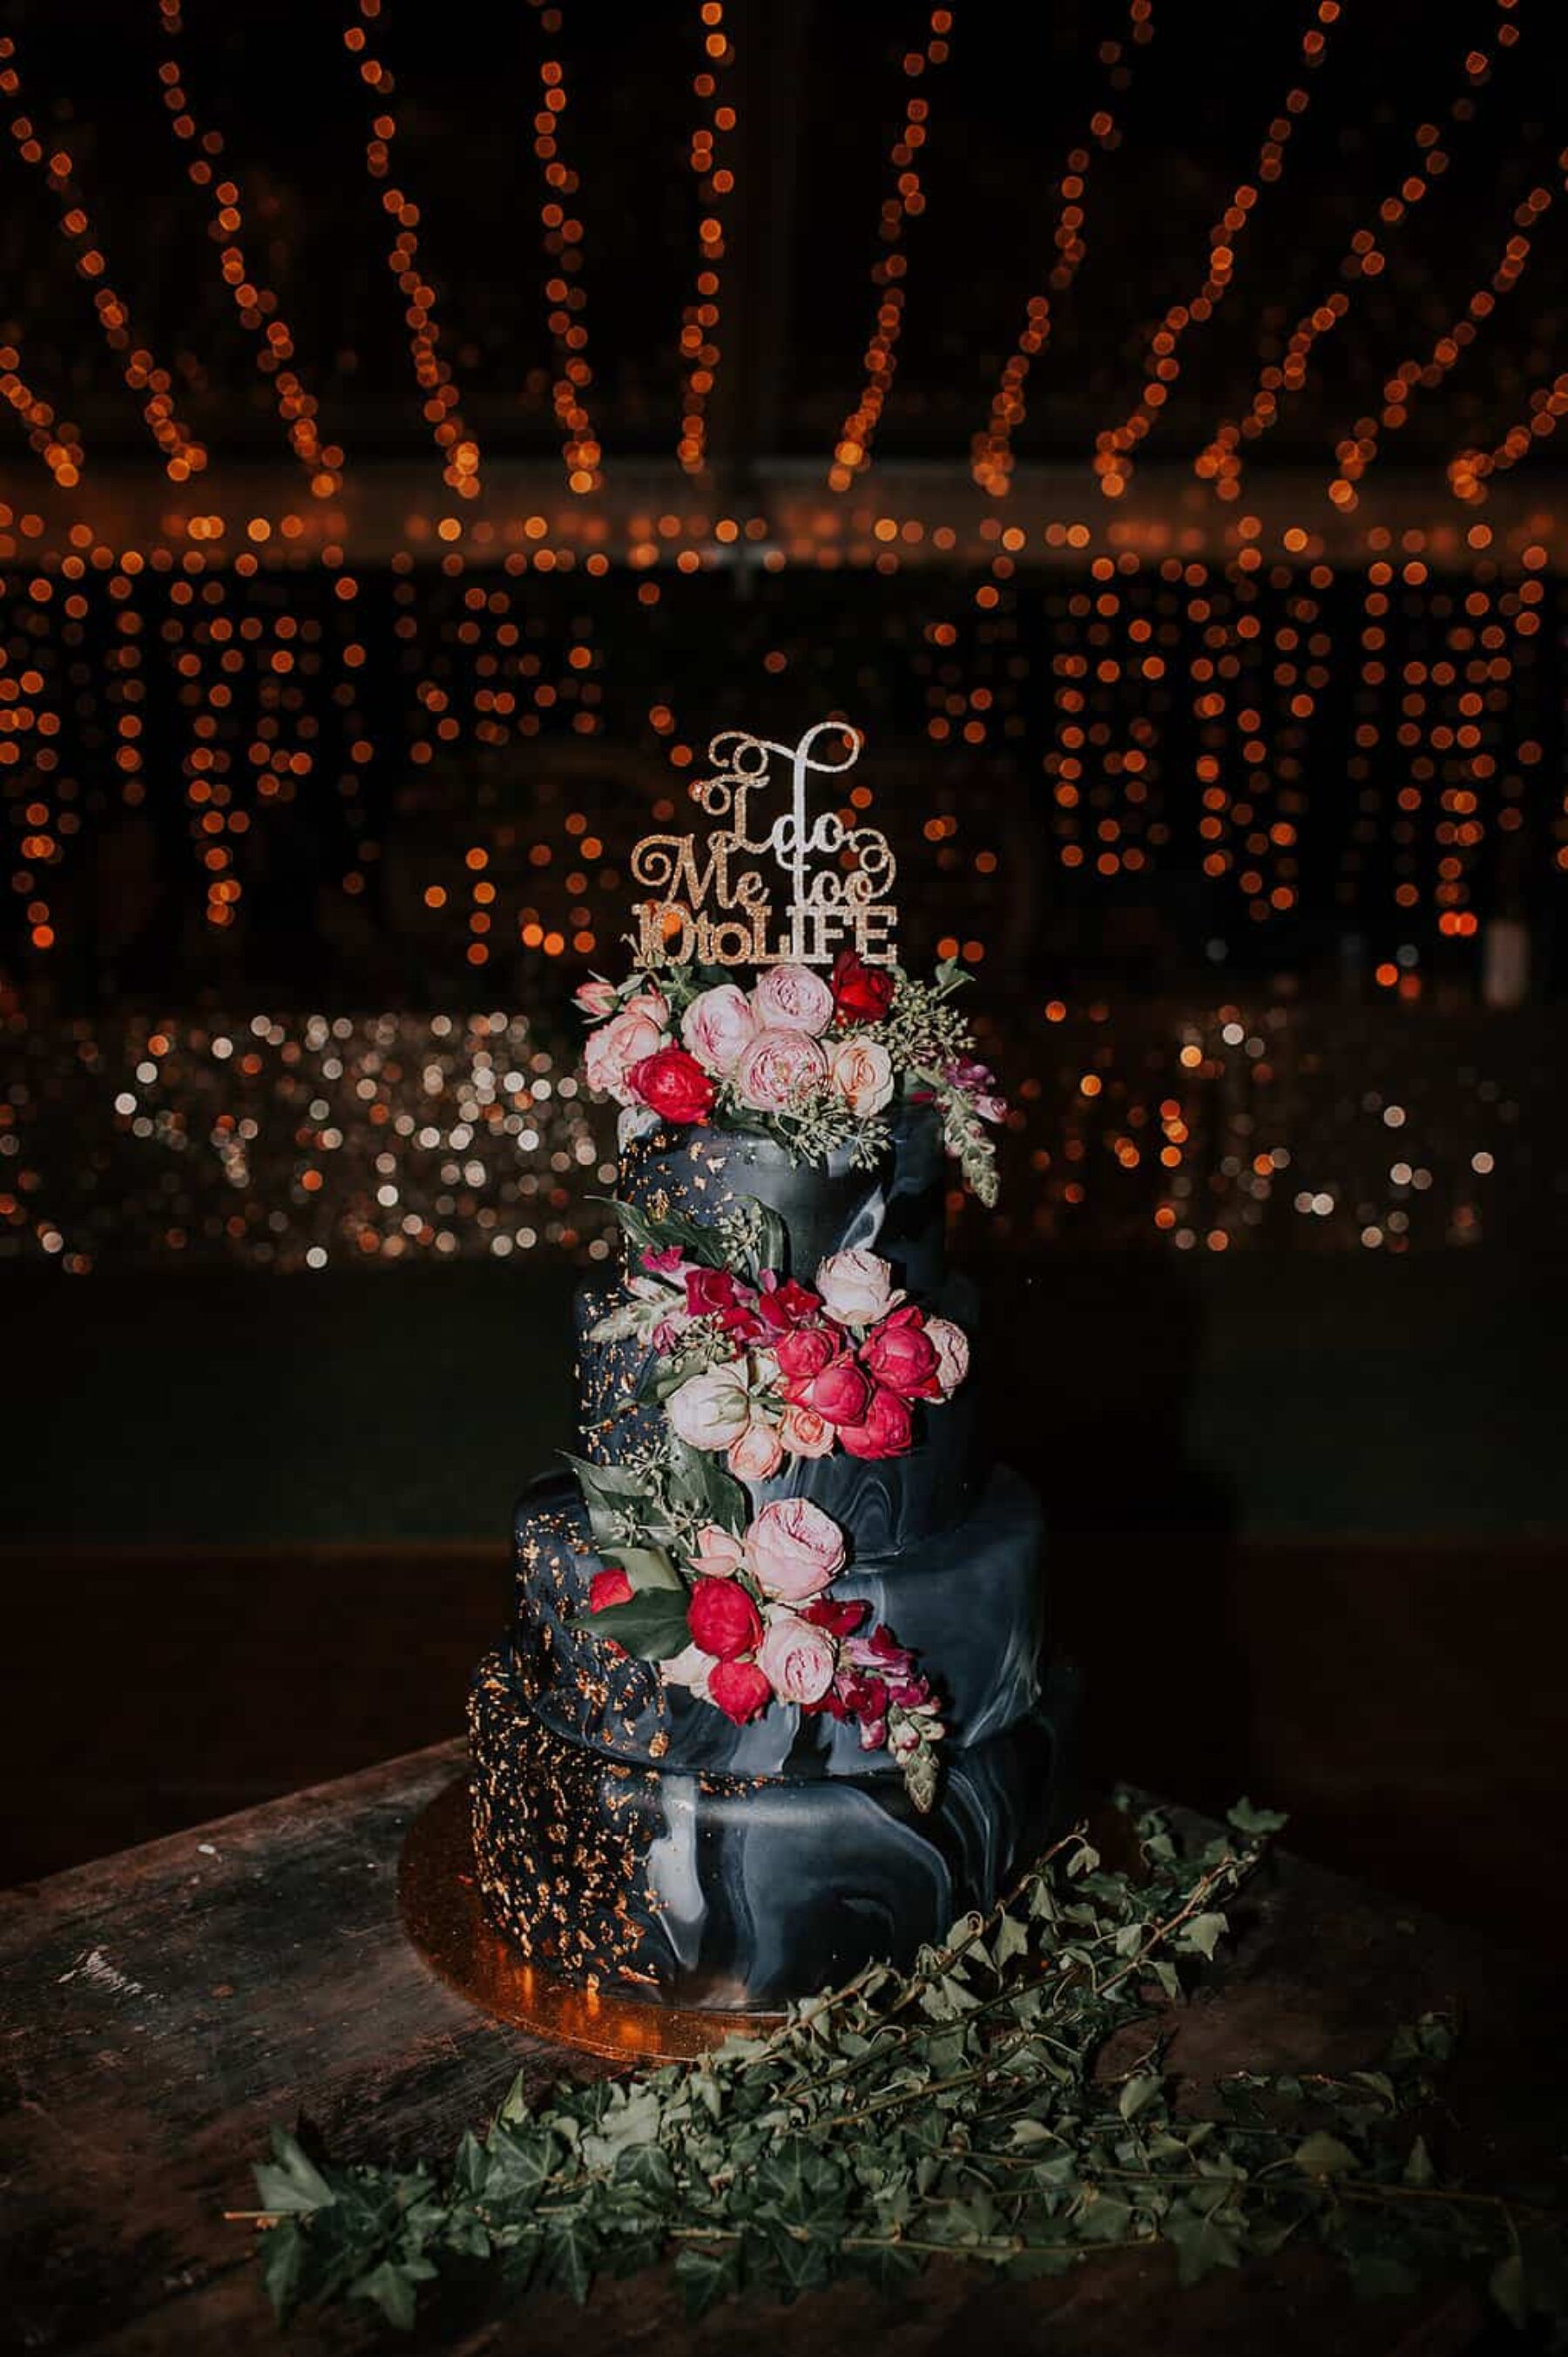 marble wedding cake with fresh flowers